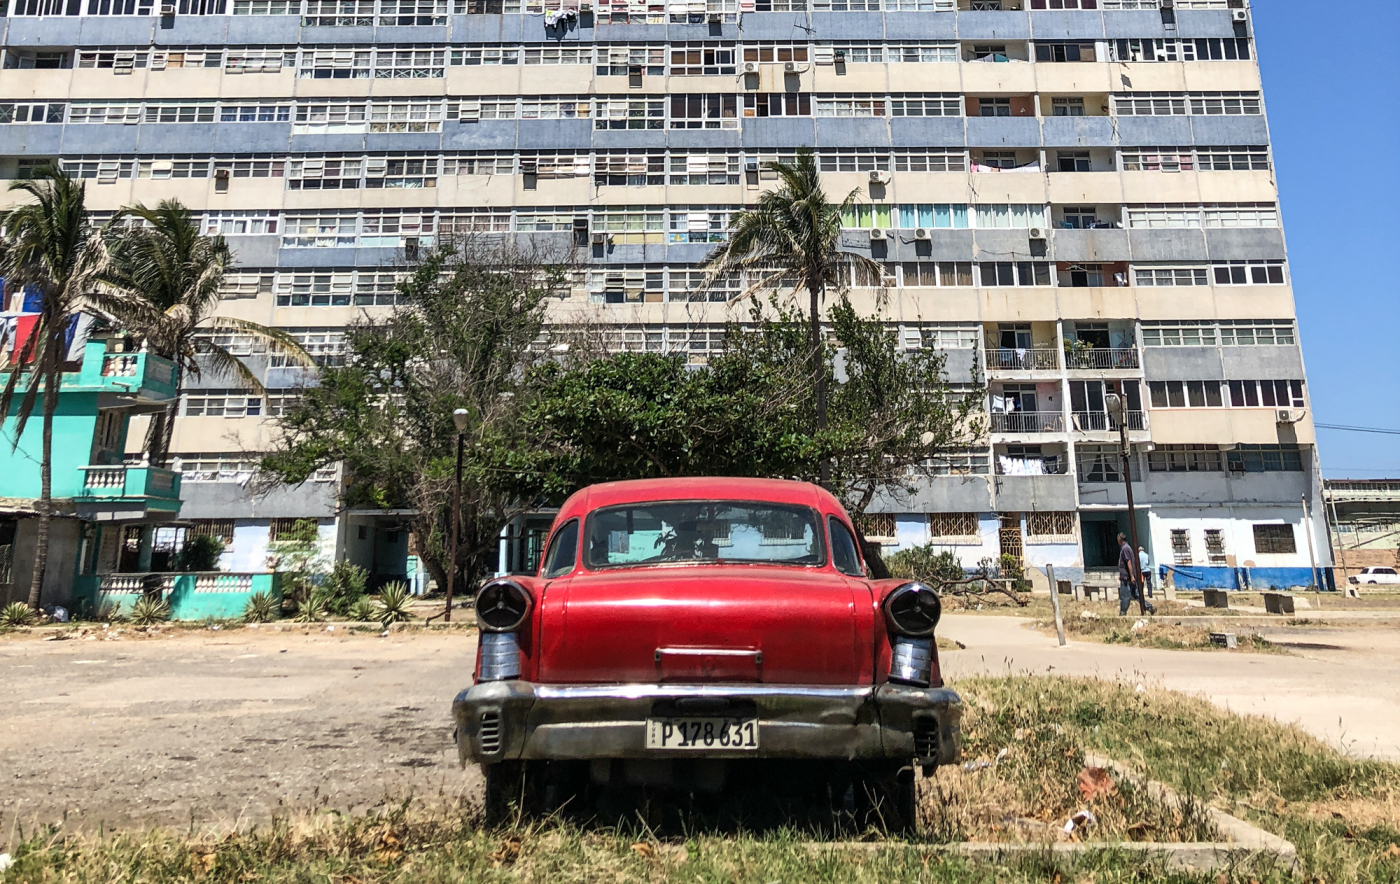 Cruise control | Behind the wheel in Cuba